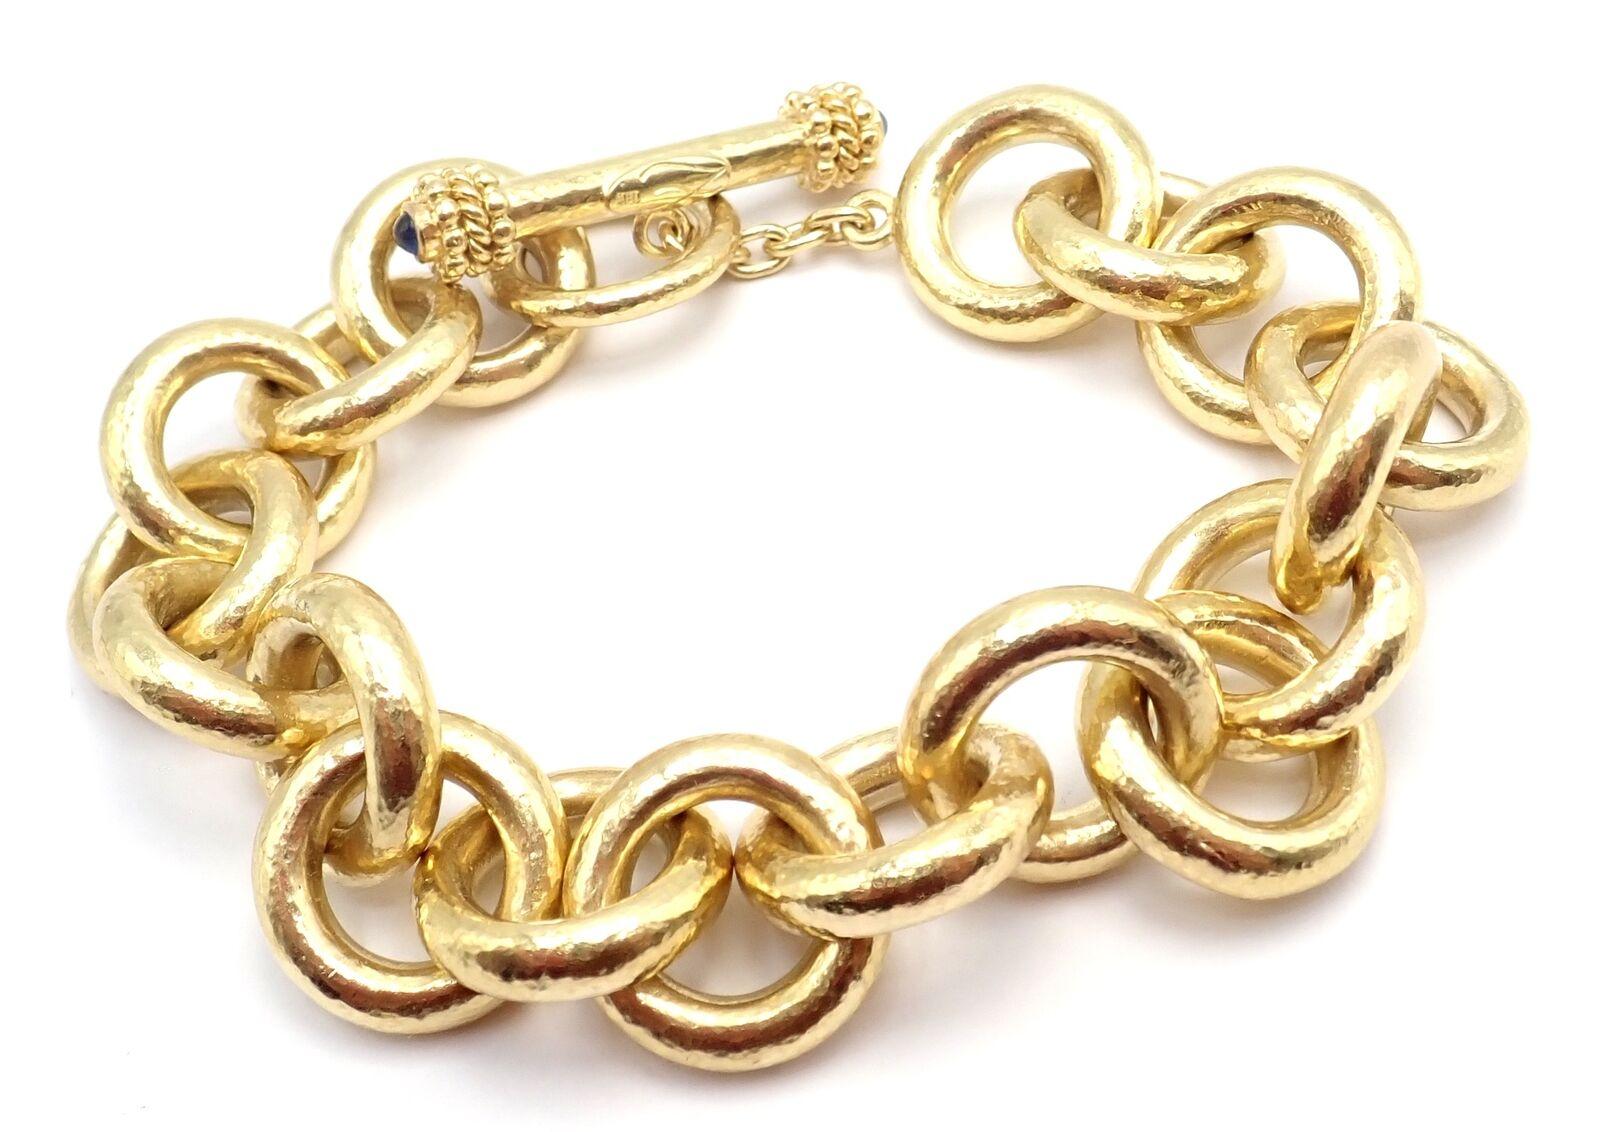 Cabochon Elizabeth Locke Sapphire Toggle Hammered Yellow Gold Link Bracelet